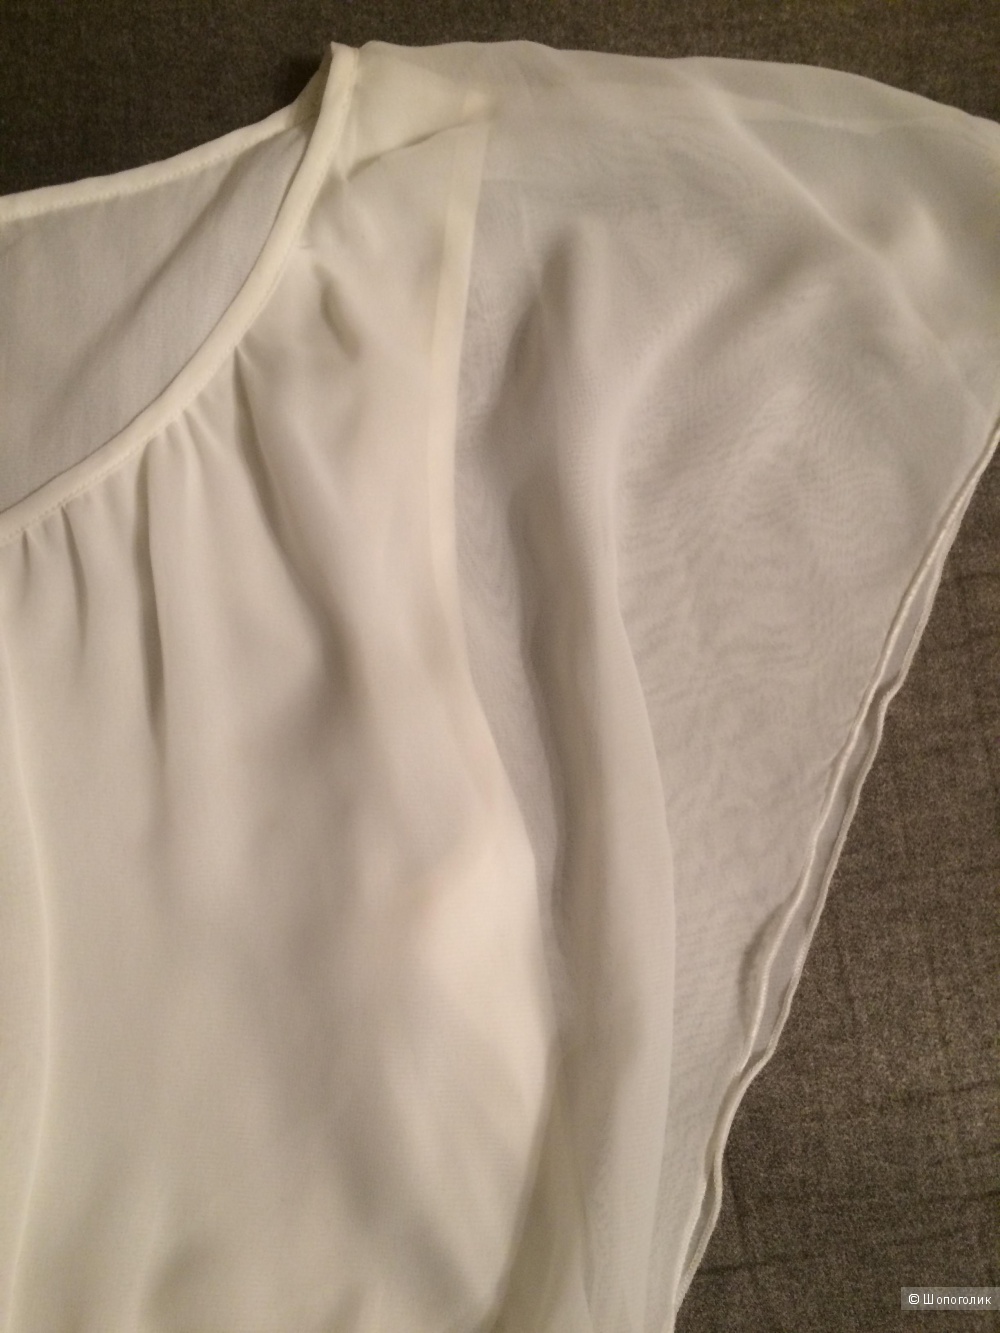 Блузка Seppala Woman XL (50) размер